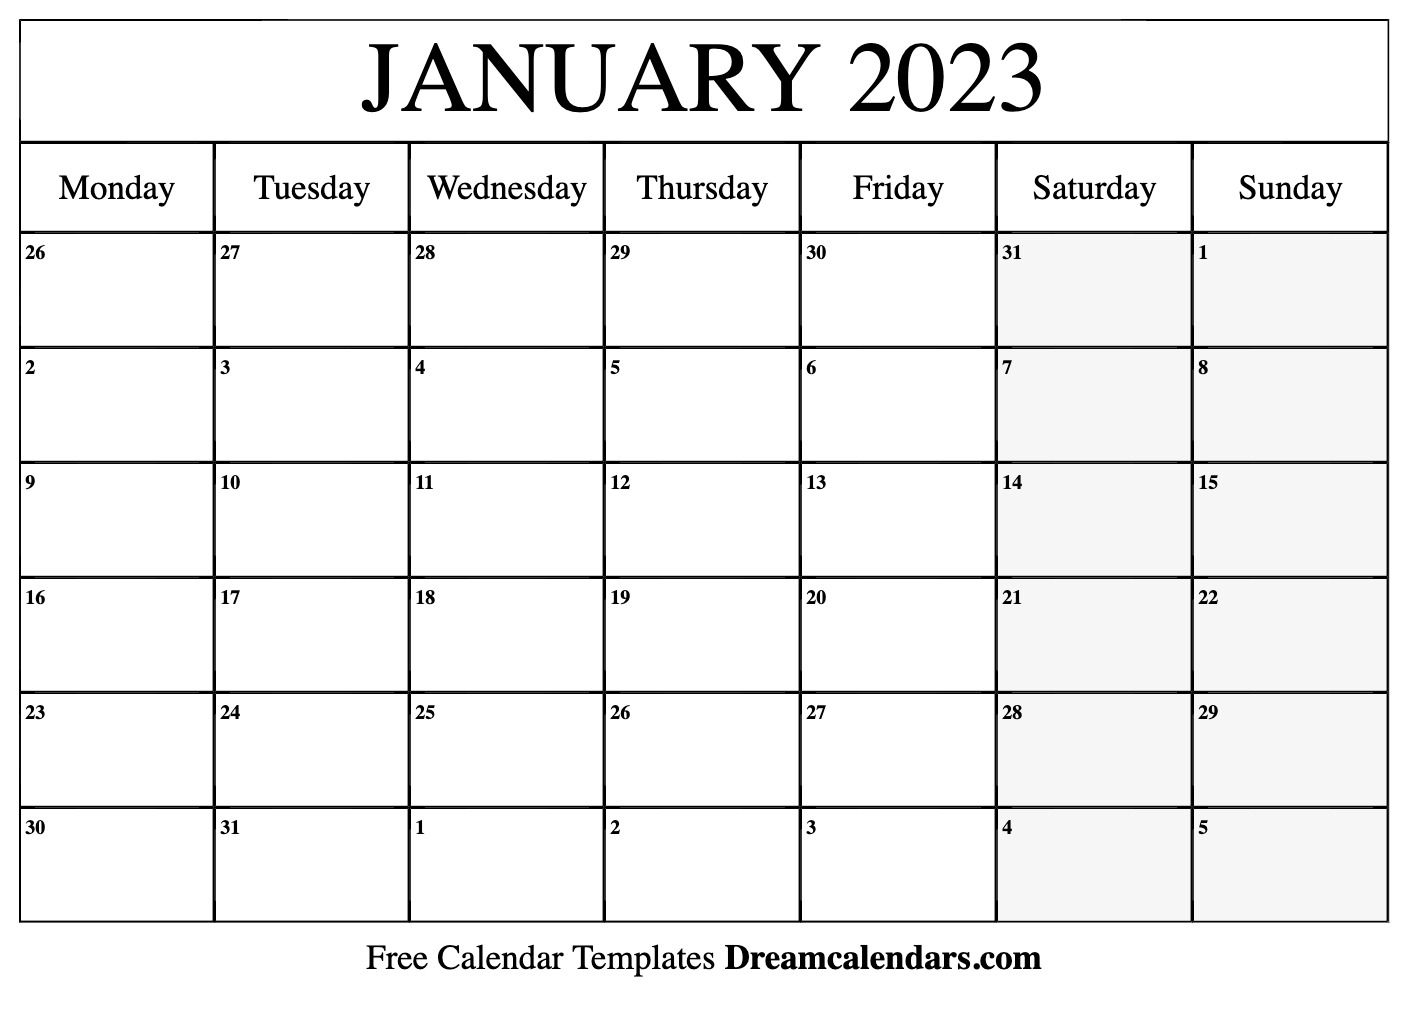 download-printable-january-2023-calendars